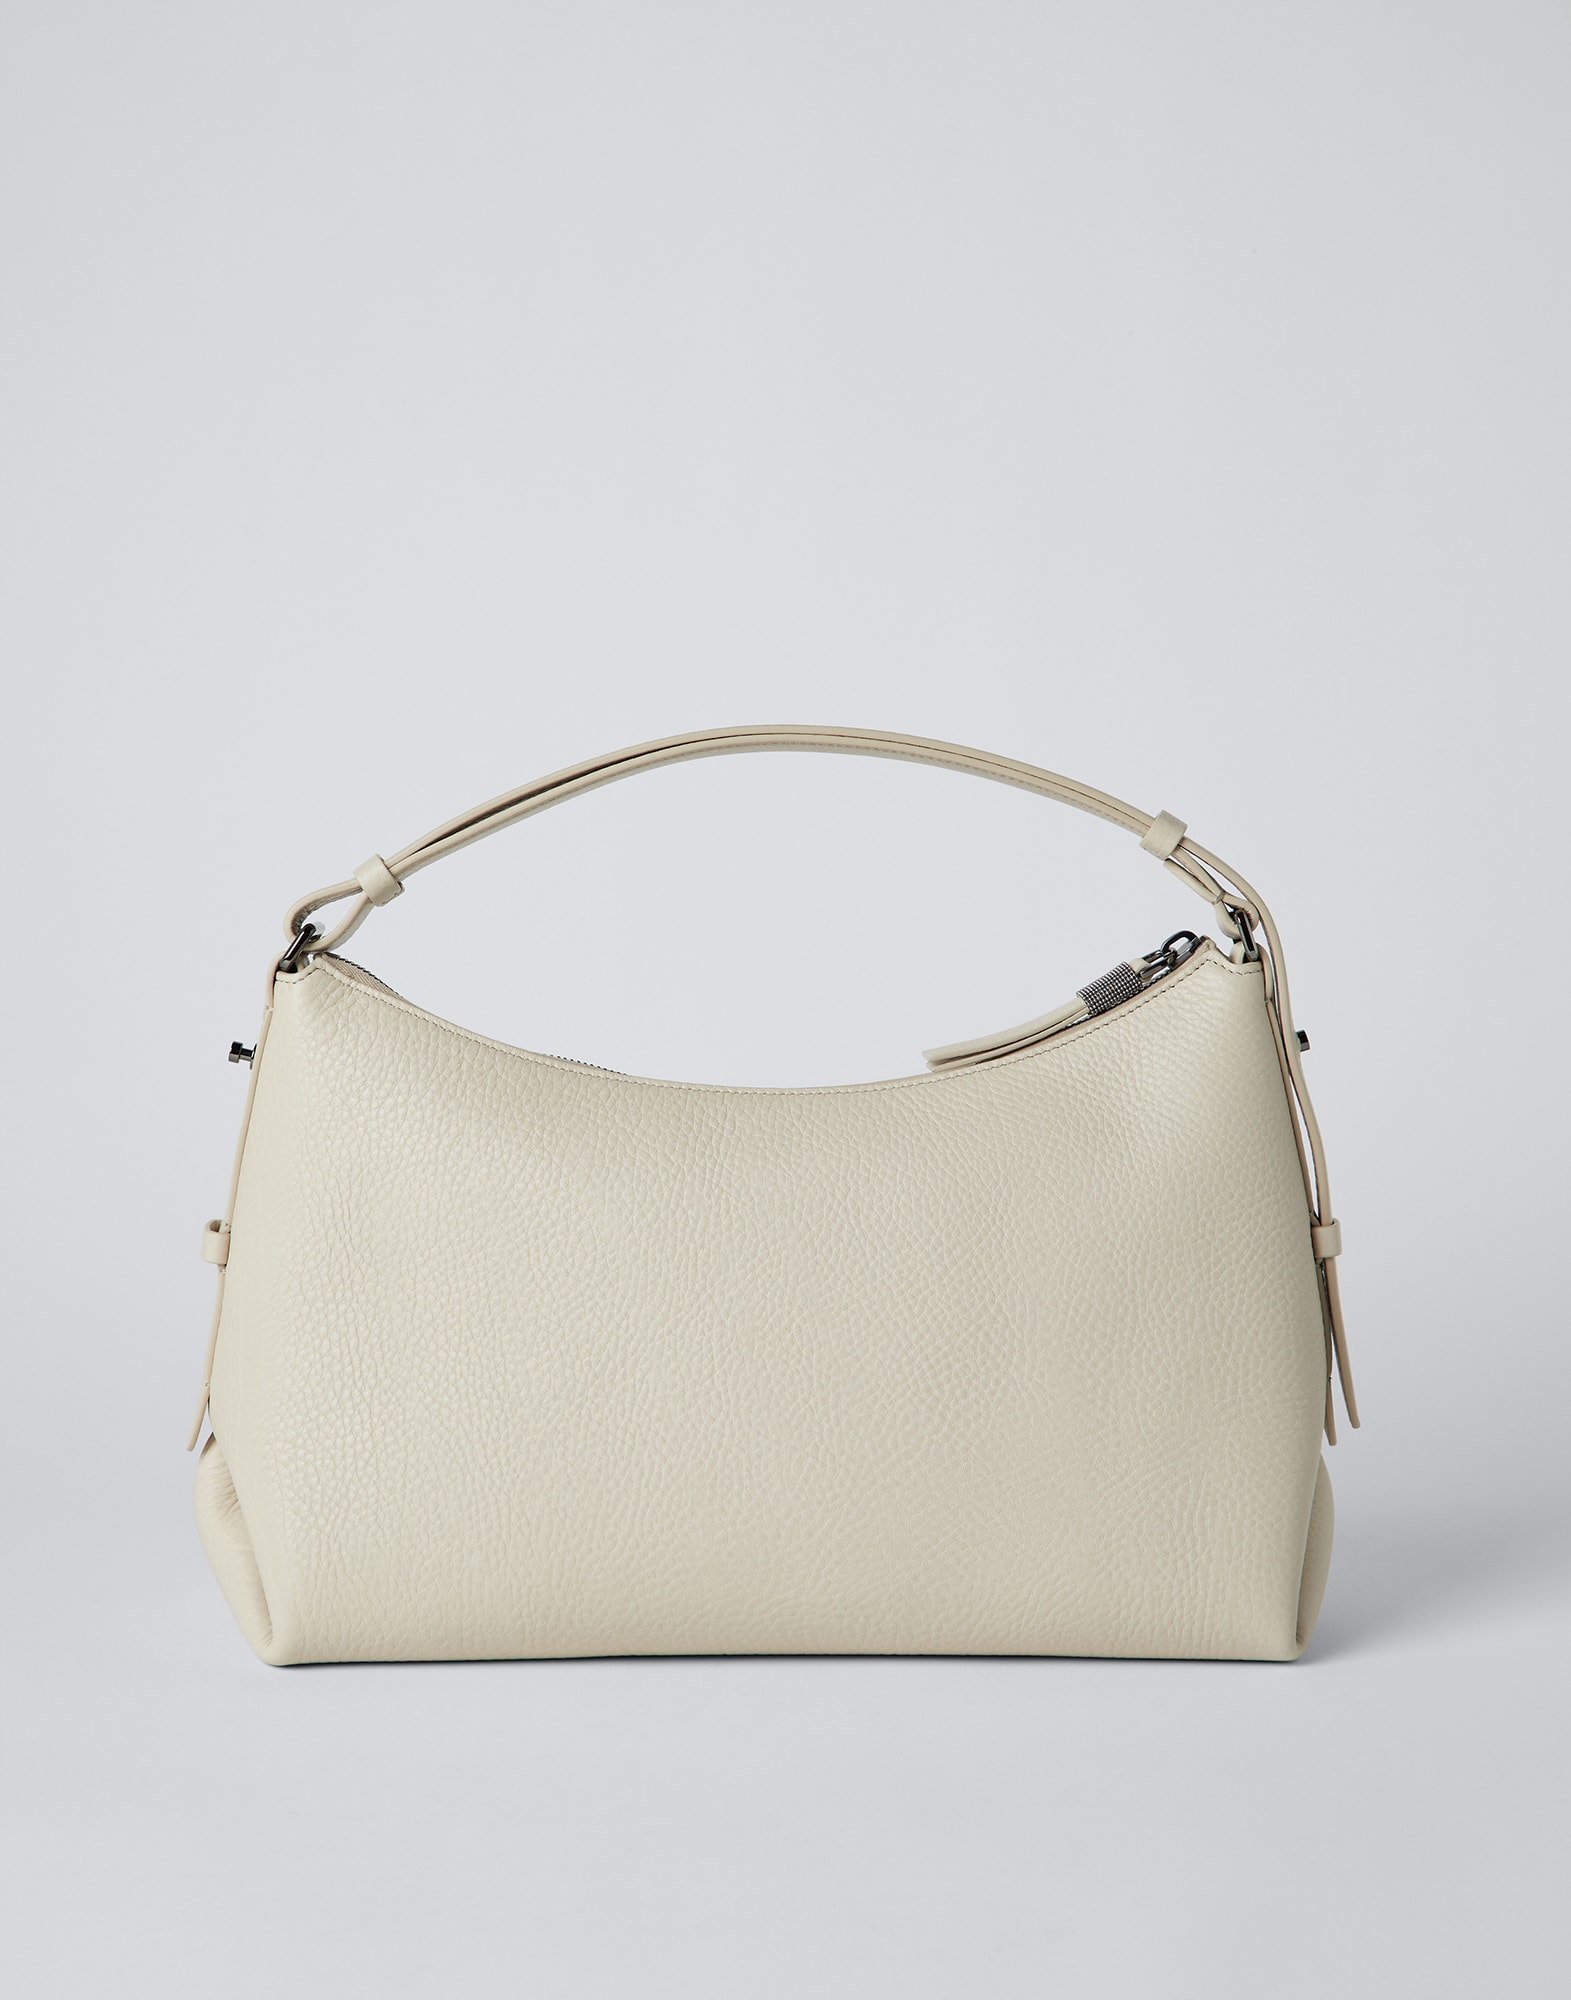 Brunello Cucinelli, Texture Calfskin Hobo Bag with monili, White, One Size